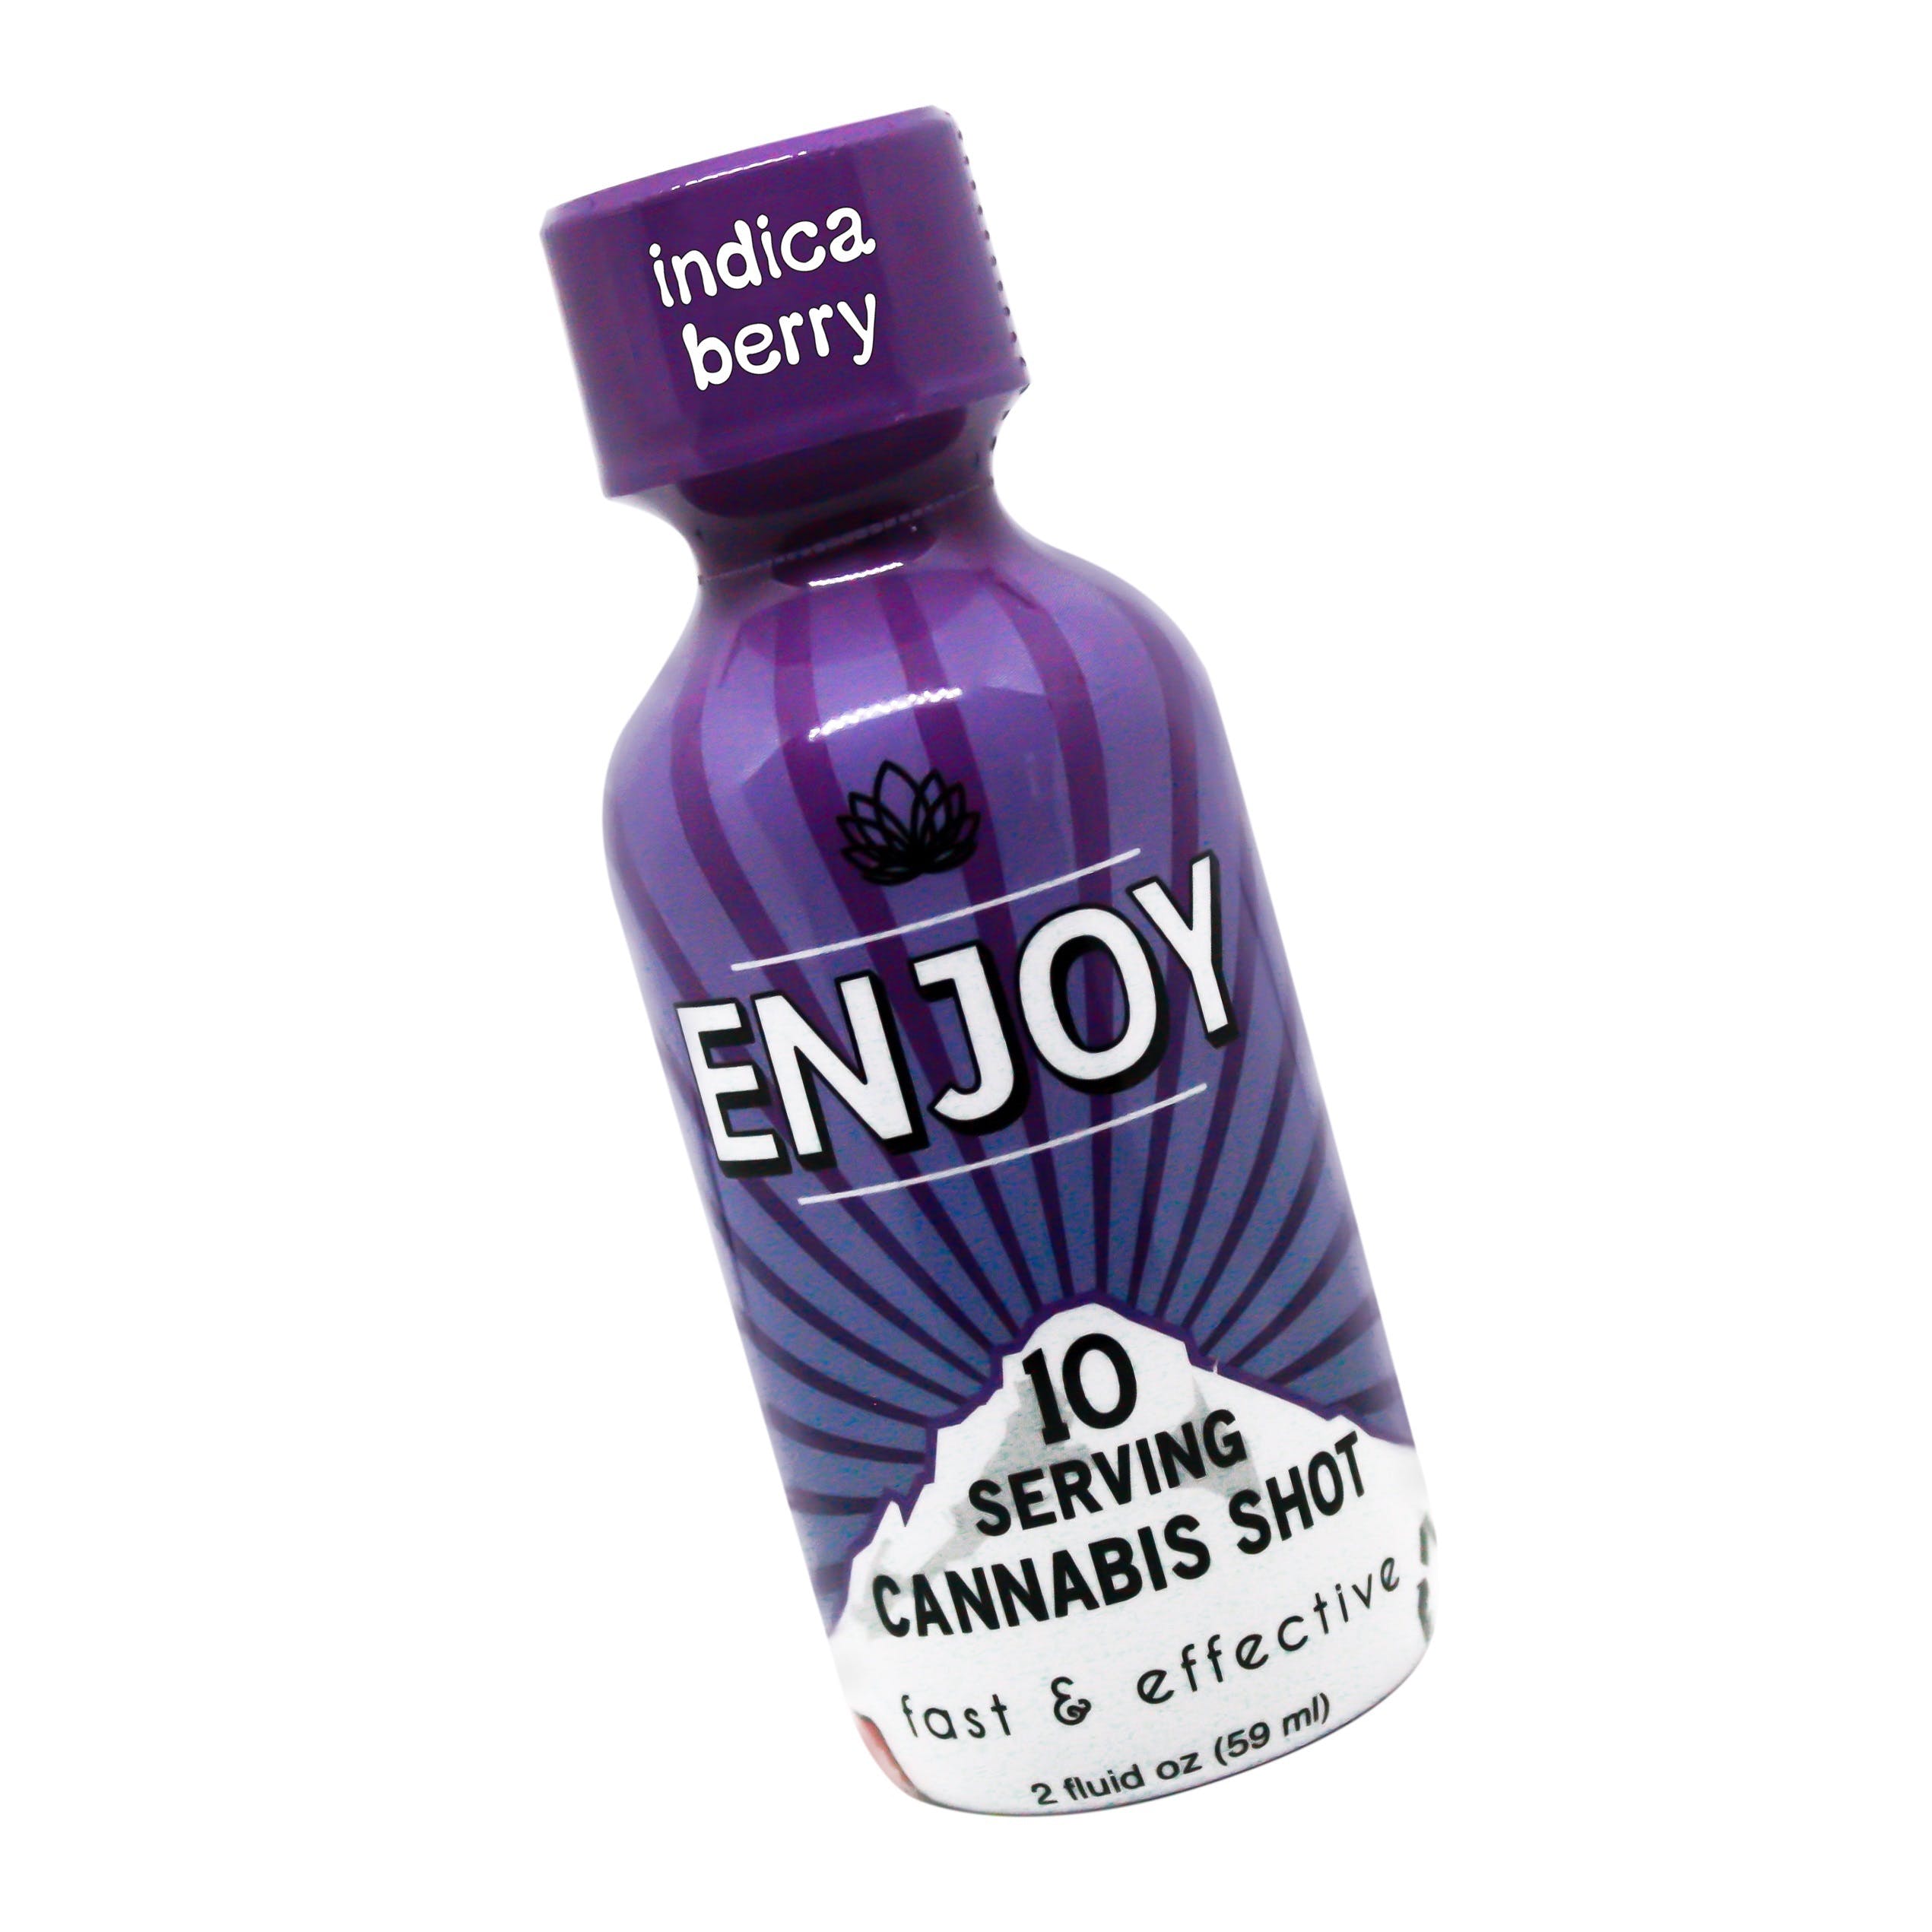 marijuana-dispensaries-tsunami-marijuana-in-seaside-enjoy-indica-berry